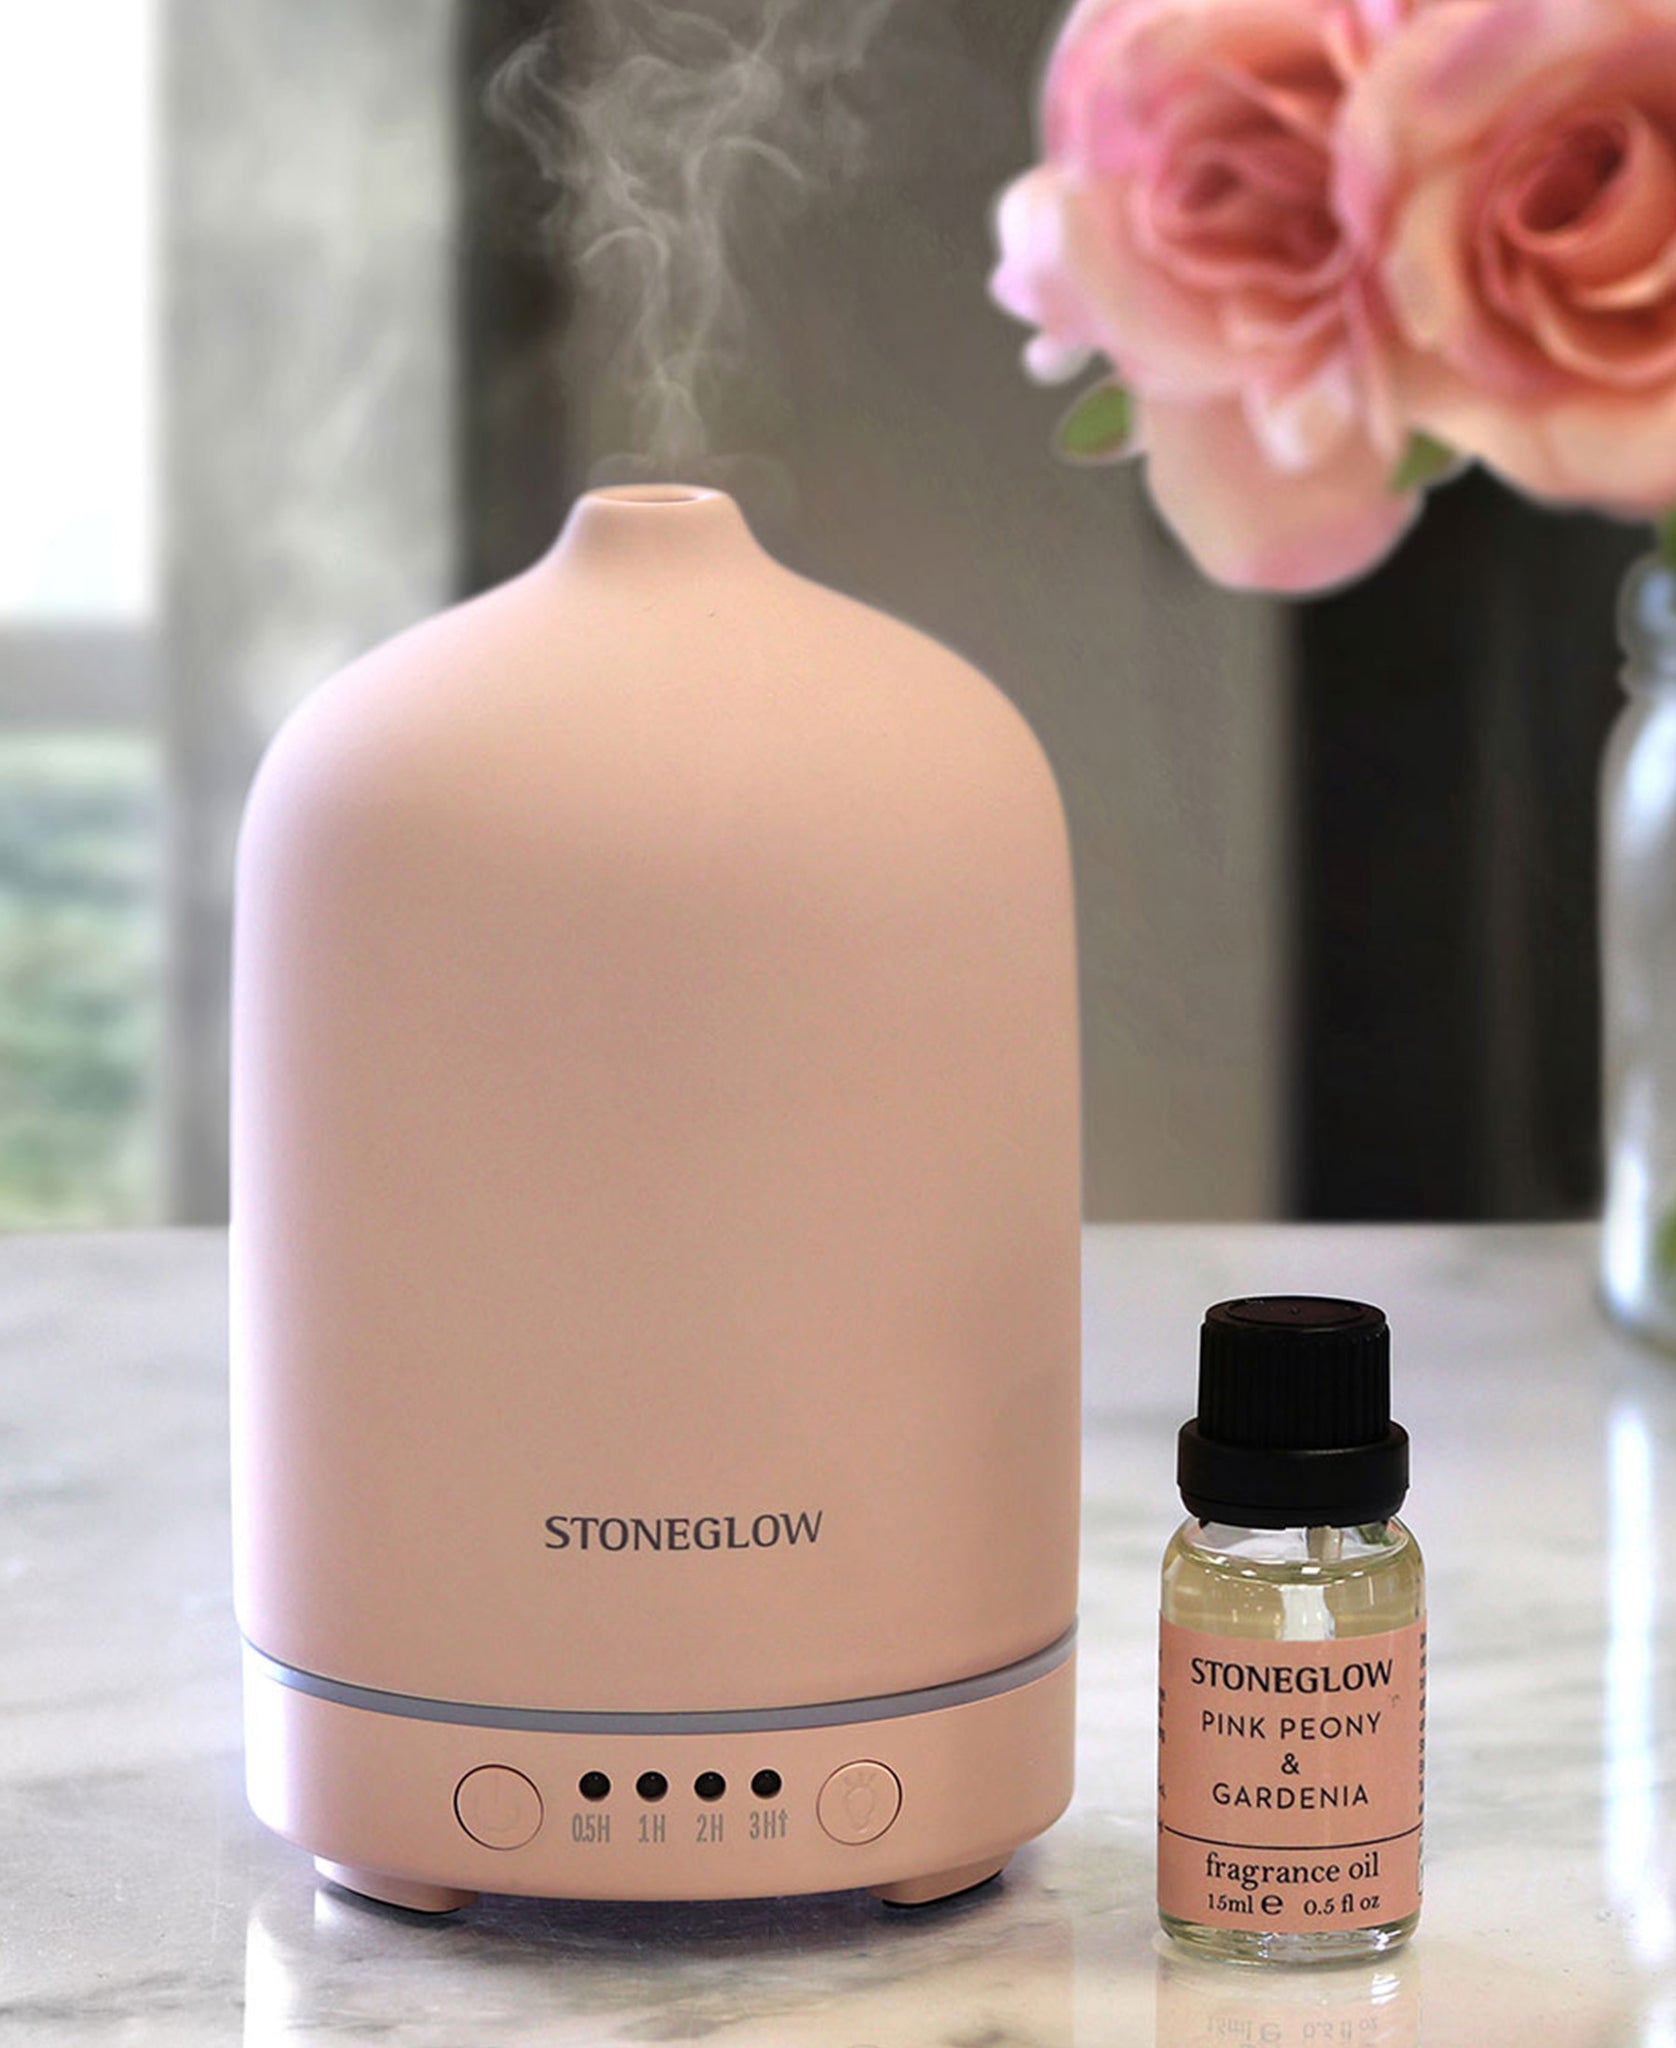 Stoneglow Modern Pink Peony & Gardenia 15ml Fragrance Oil - Pink